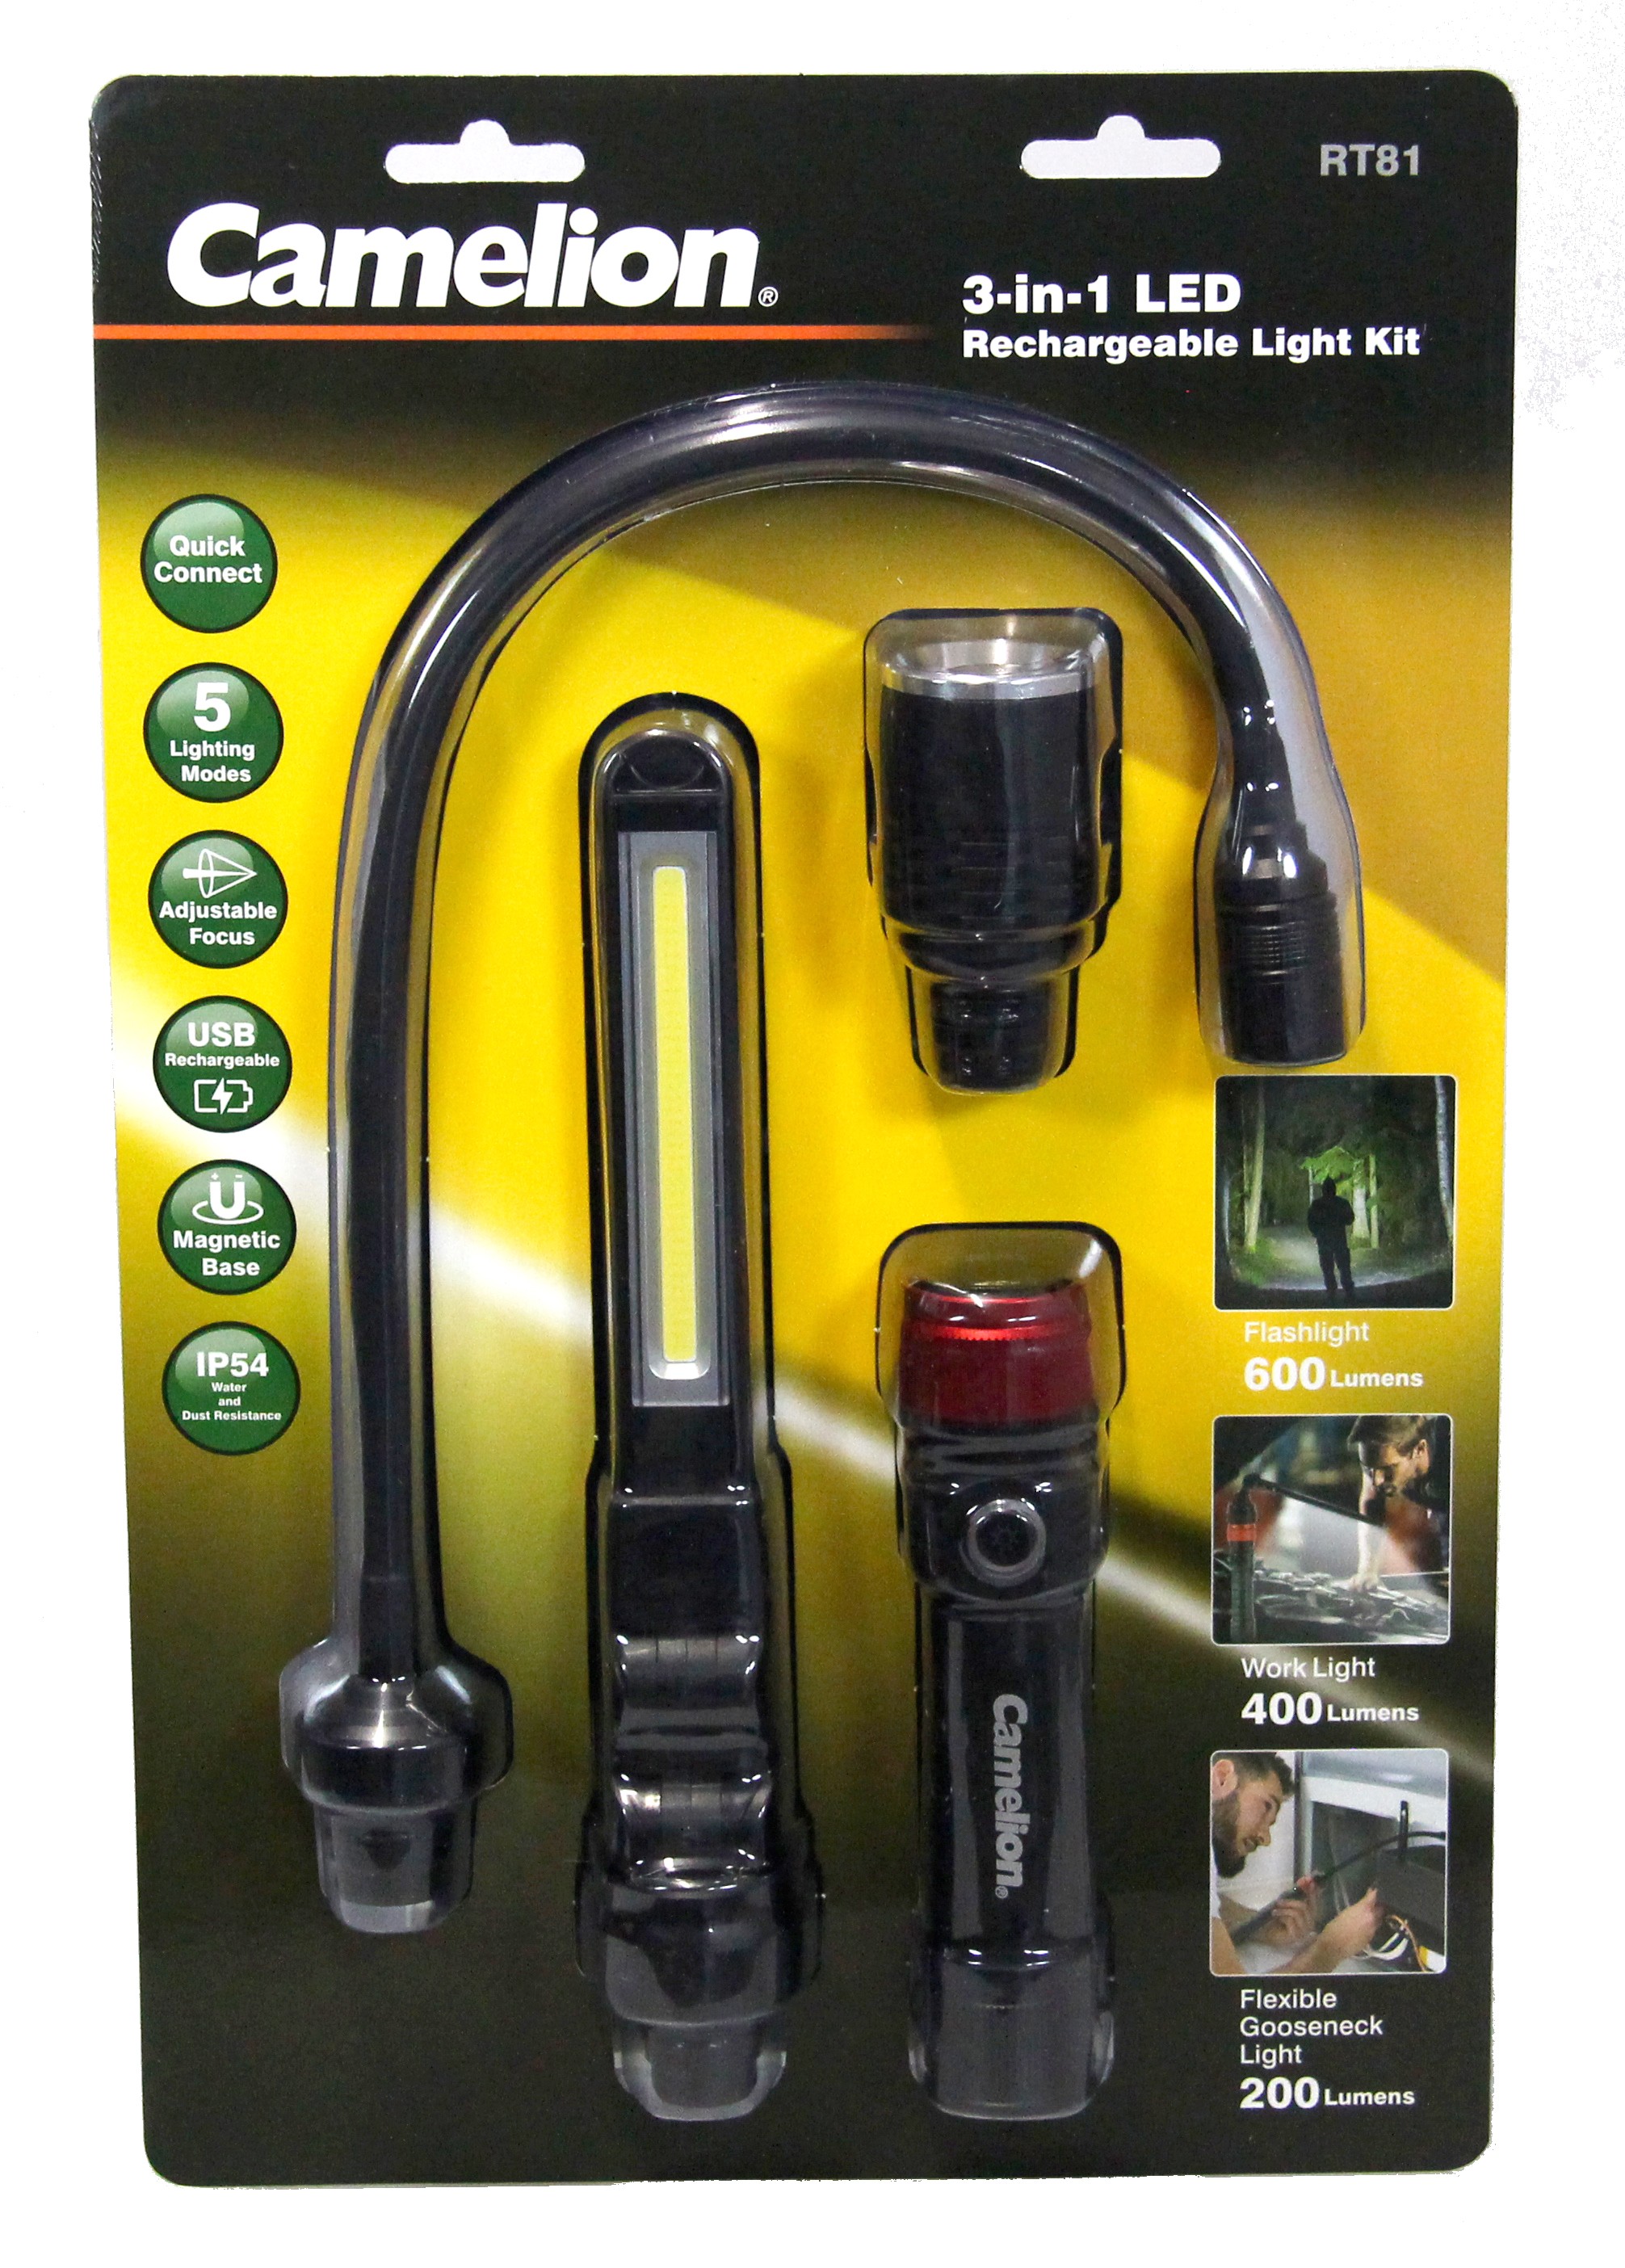 kondensator lager Fortov Camelion USB 3in1 KIT Torch - Torches - Products PeleGuy Distribution Pty  Ltd 1300 377 341